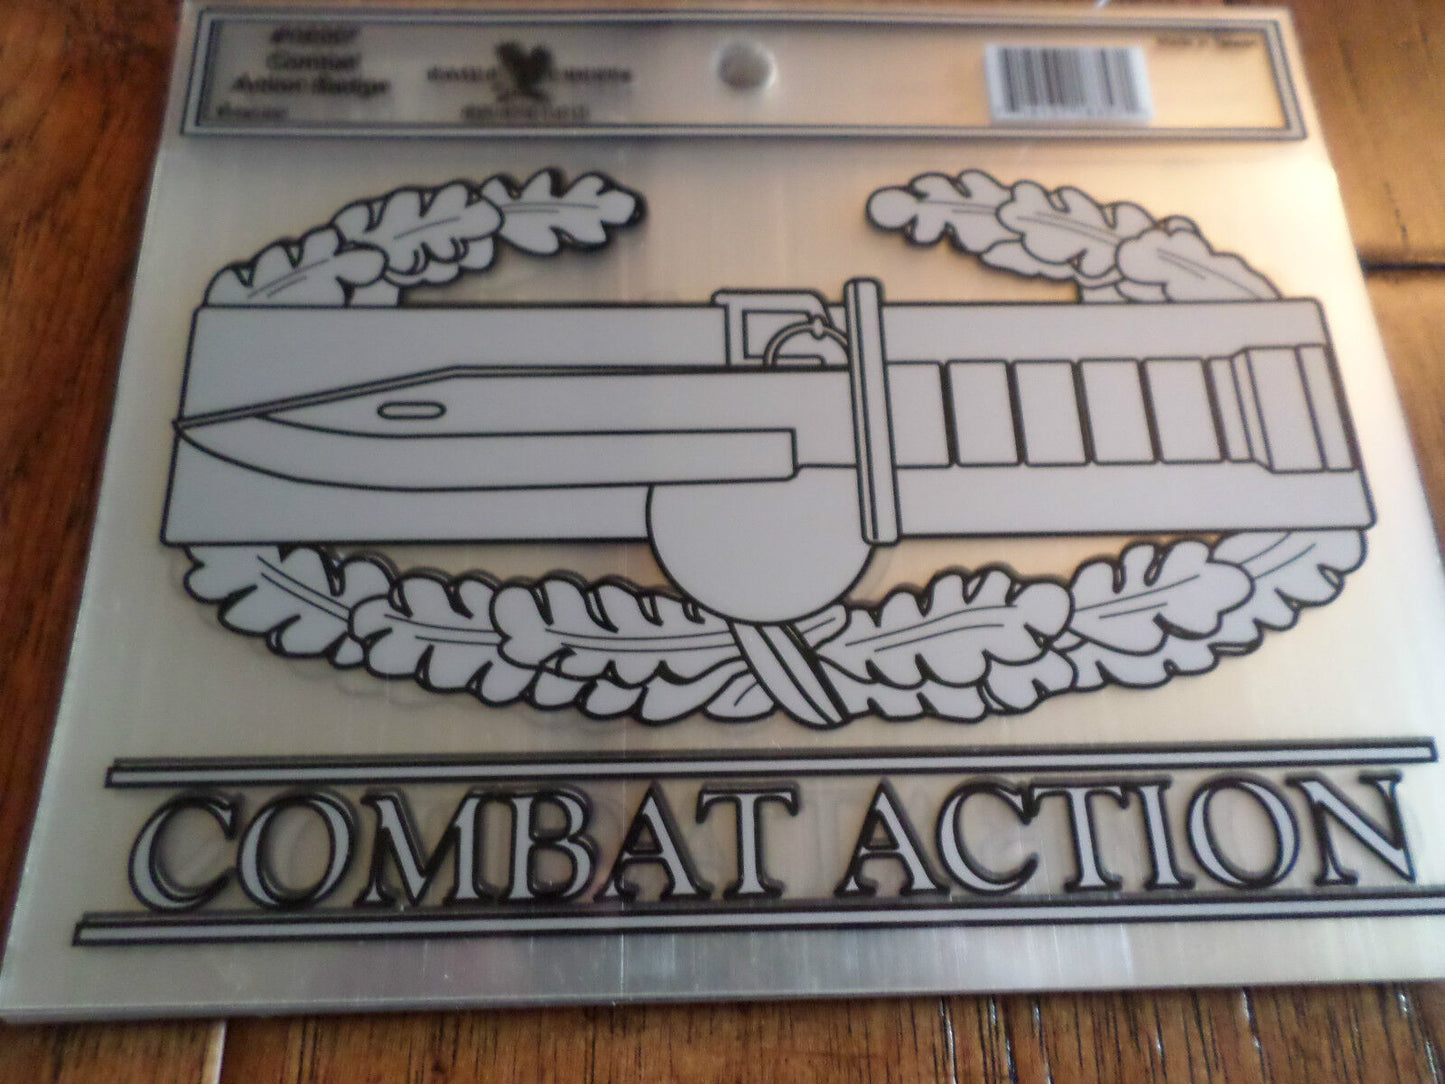 U.S. MILITARY COMBAT ACTION  WINDOW DECAL/BUMPER STICKER.